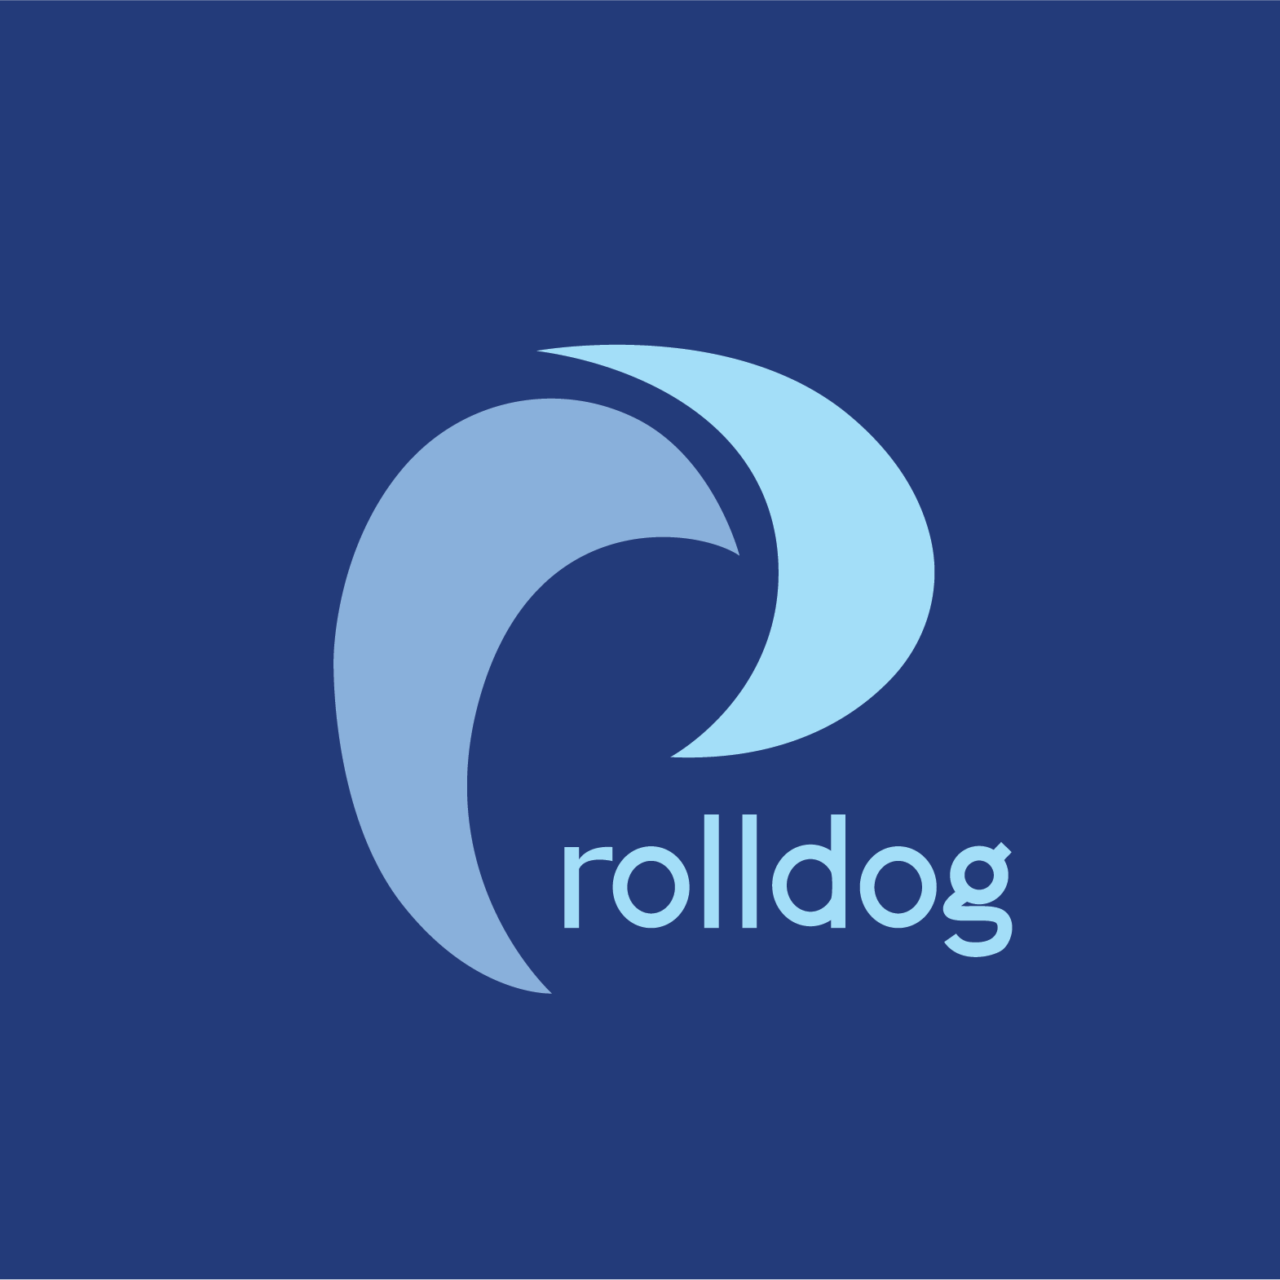 Rolldog’s logo